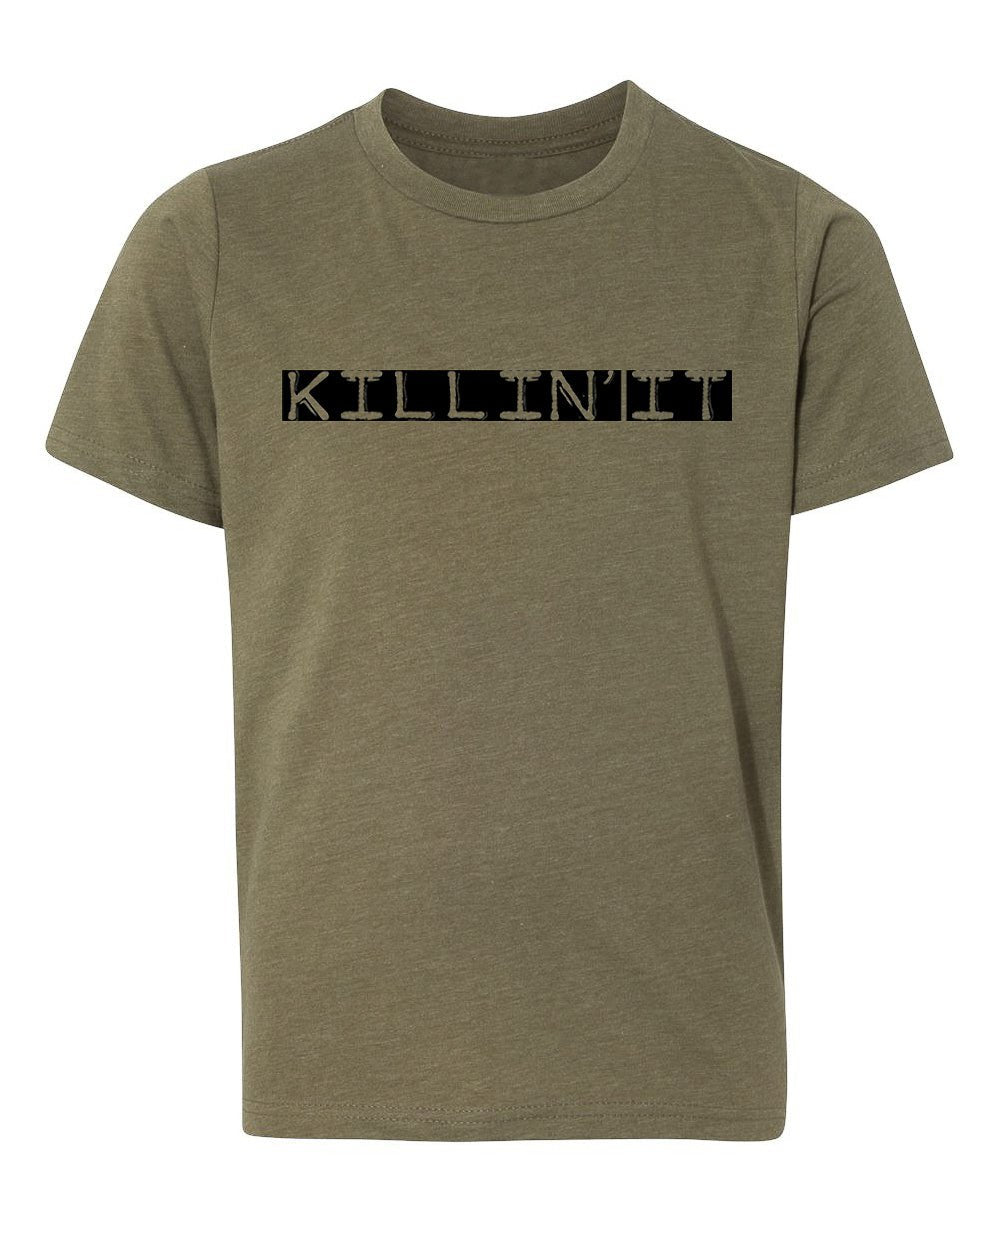 Shirt - Killin It -Feminist Shirts For Girls, Girl Power T-shirts